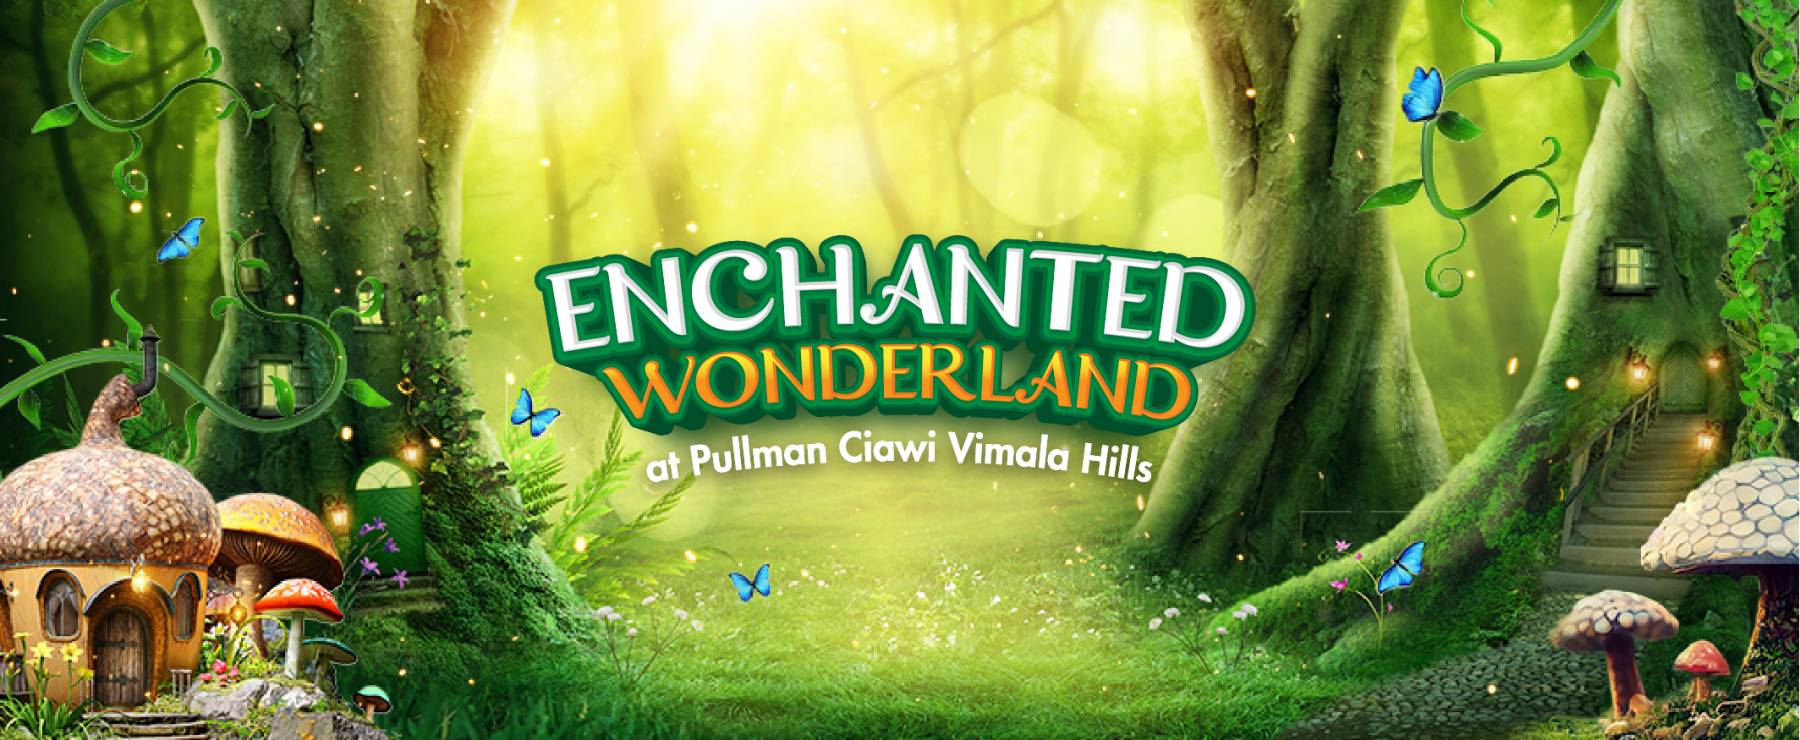 enchanted-wonderland